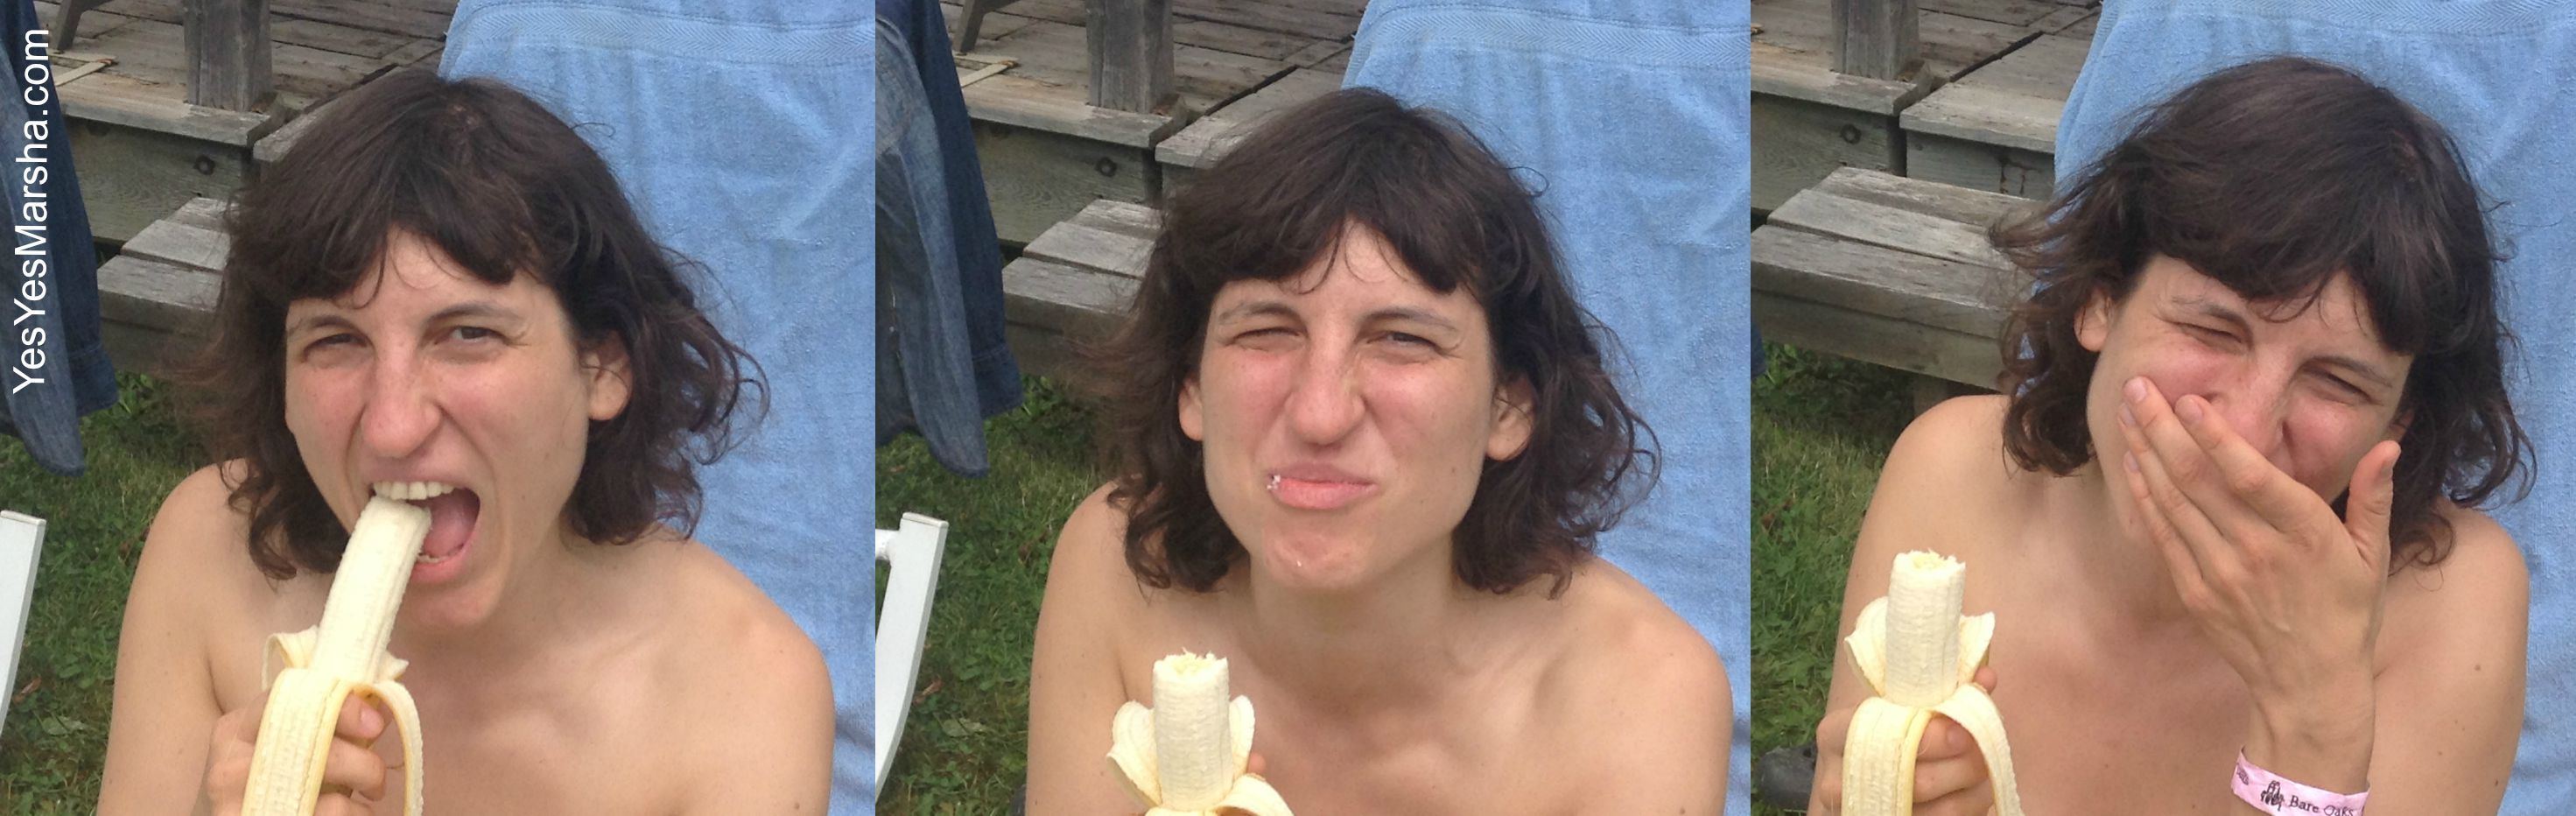 best of Summer story Camp nudist